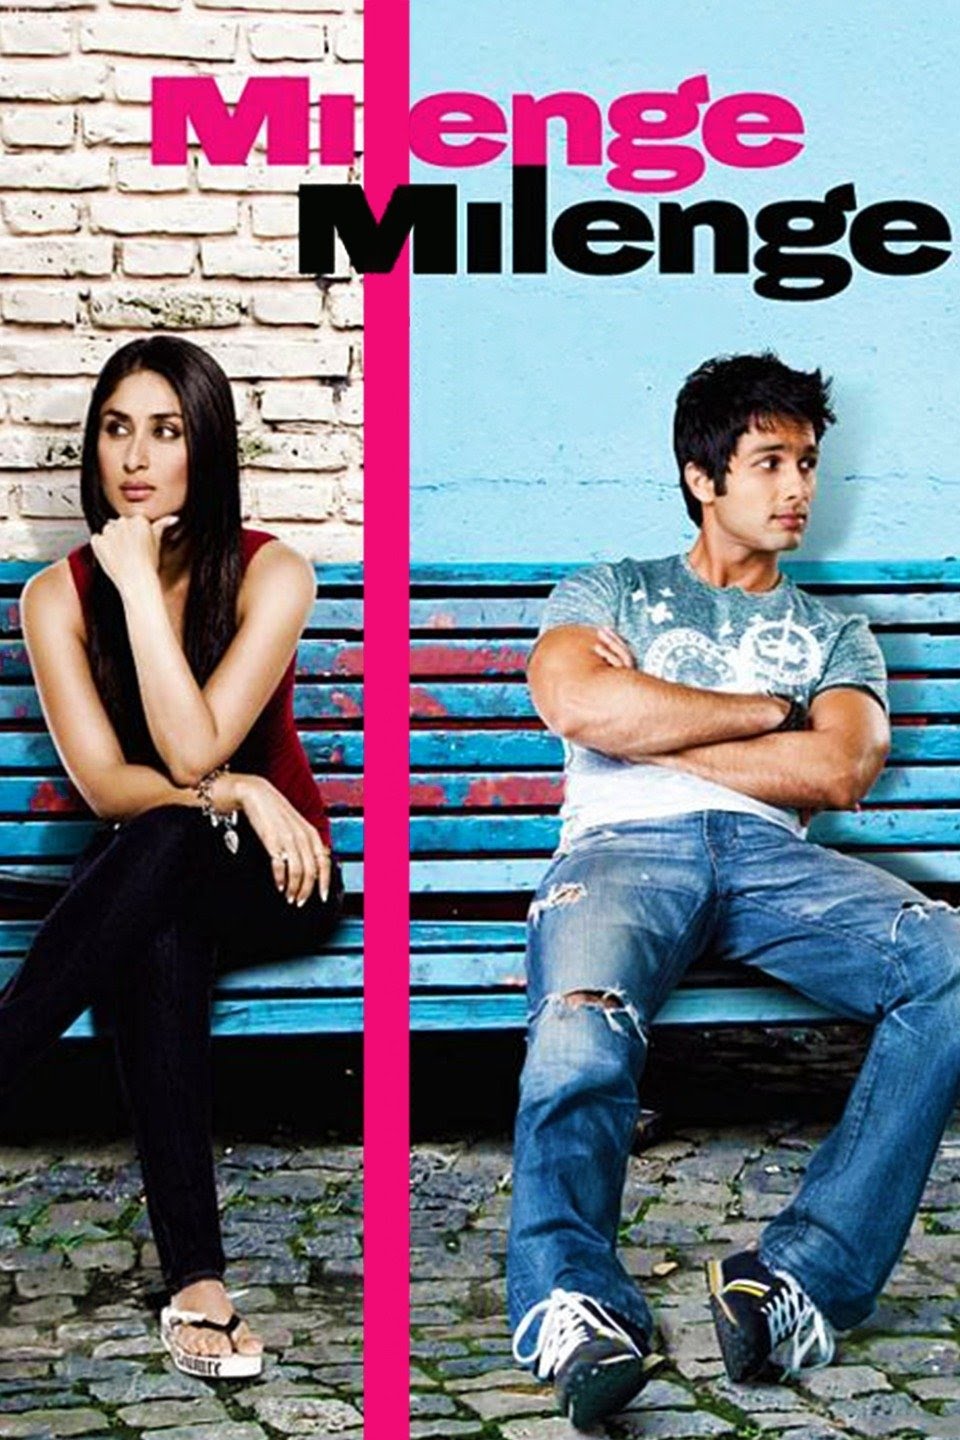 Download Milenge Milenge 2010 HDRip 720p Full Hindi Movie